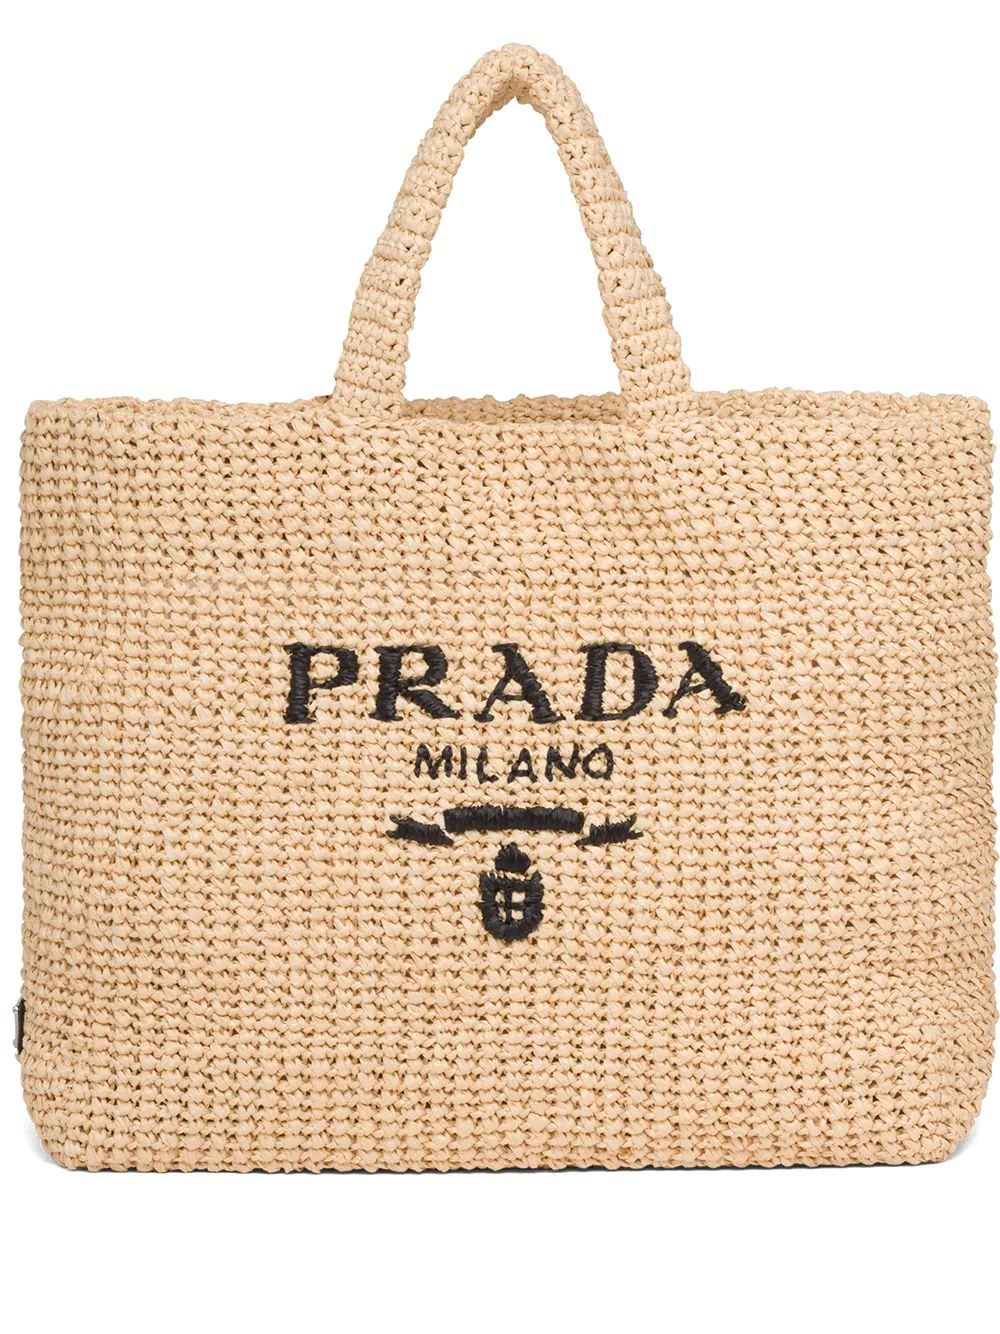 Prada purse with serial numbers below in descri